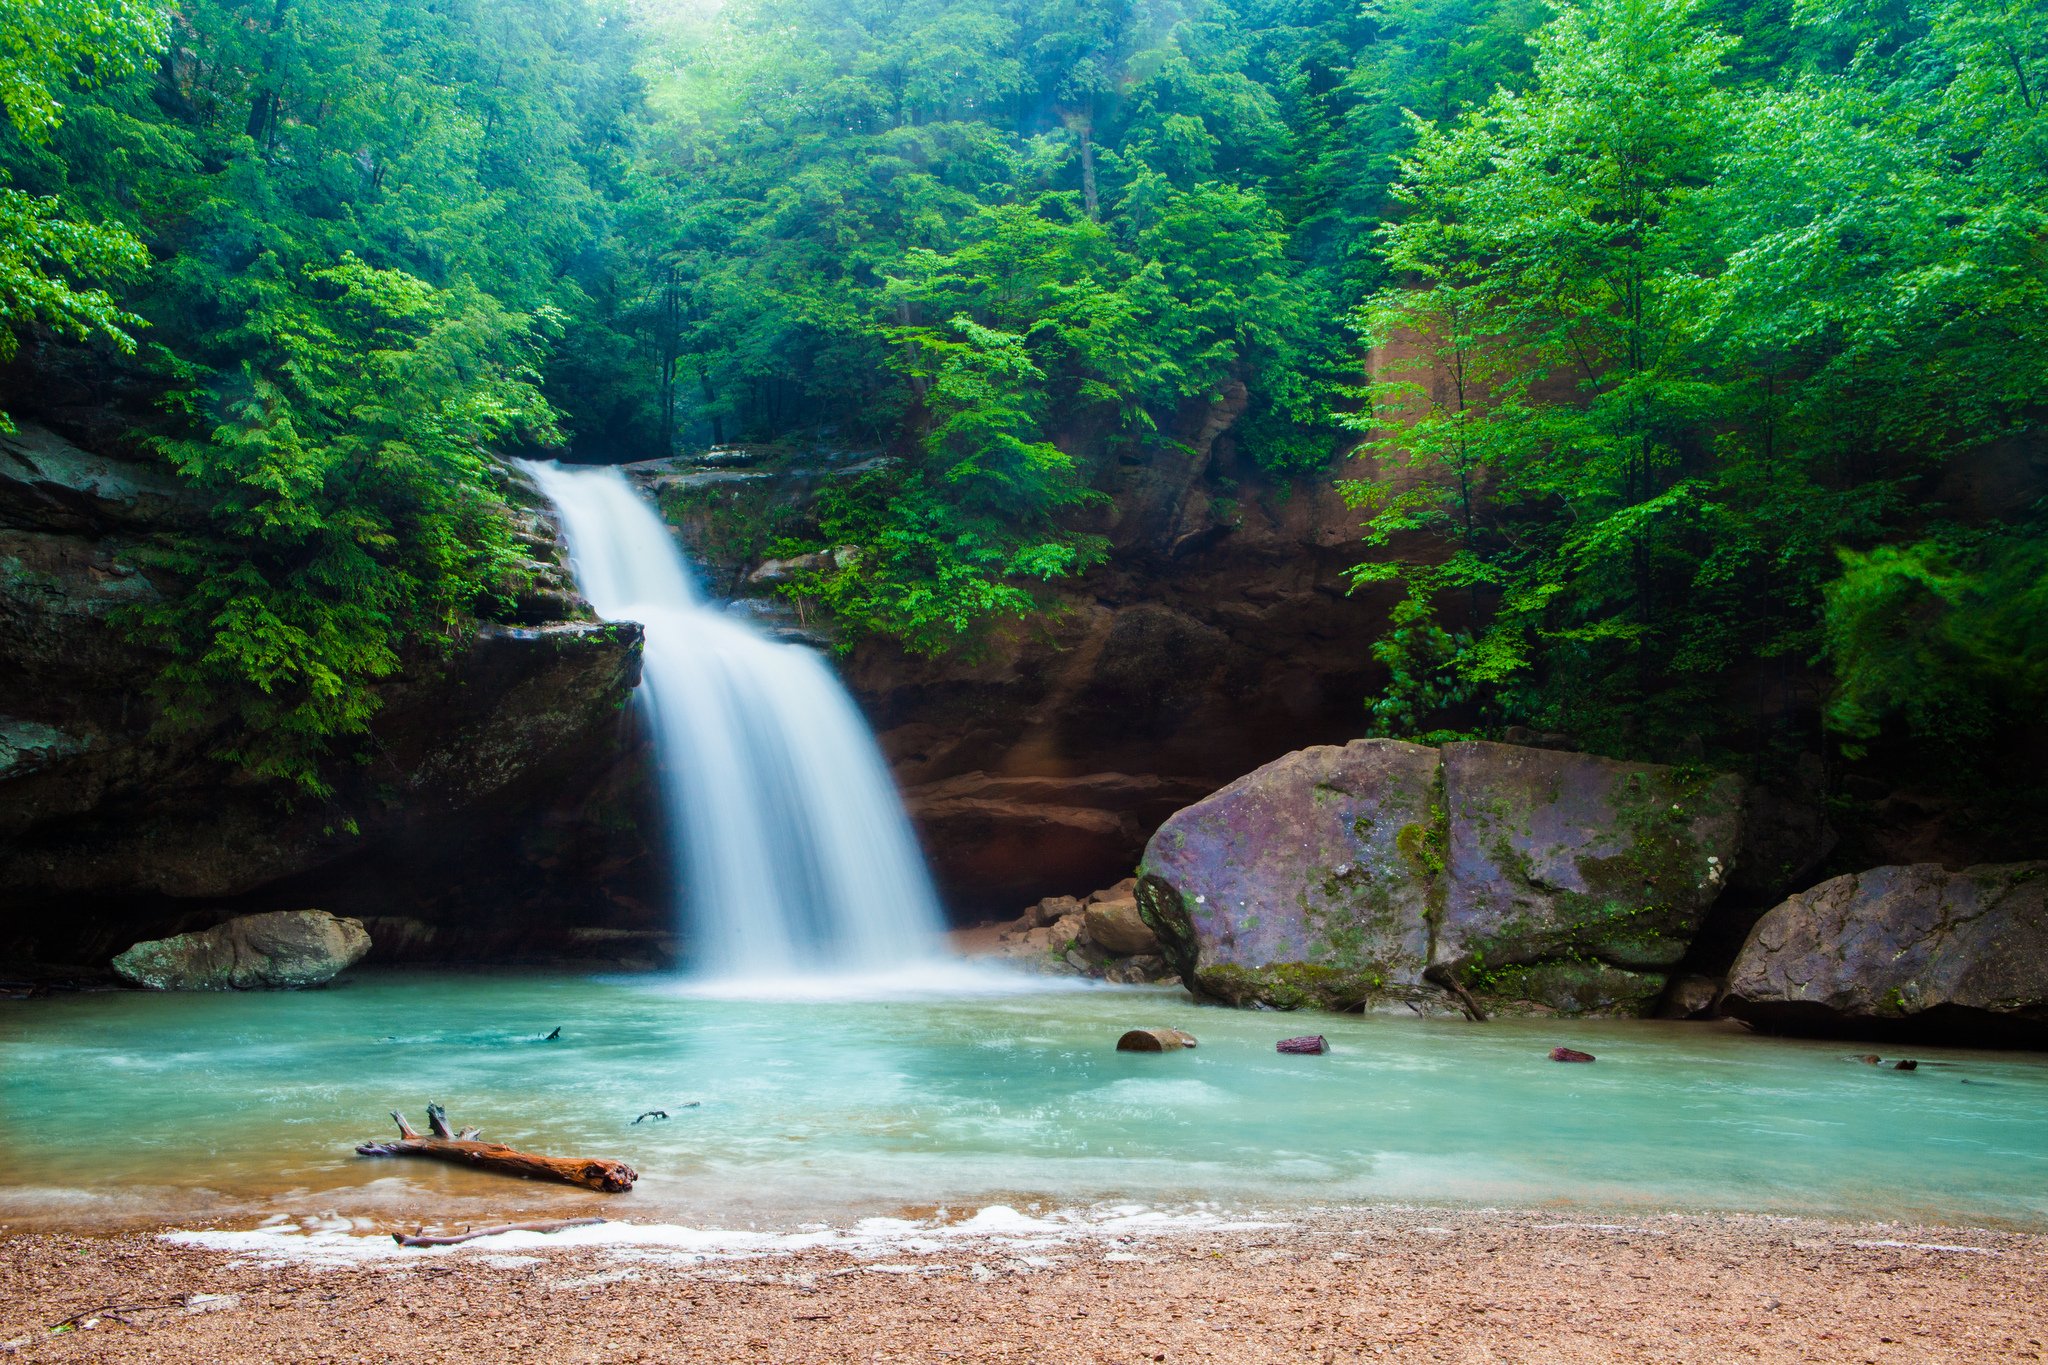 Обои на телефон живой водопад. Клонг Чао водопад. Красивые водопады. Лесной водопад. Живая природа водопады.